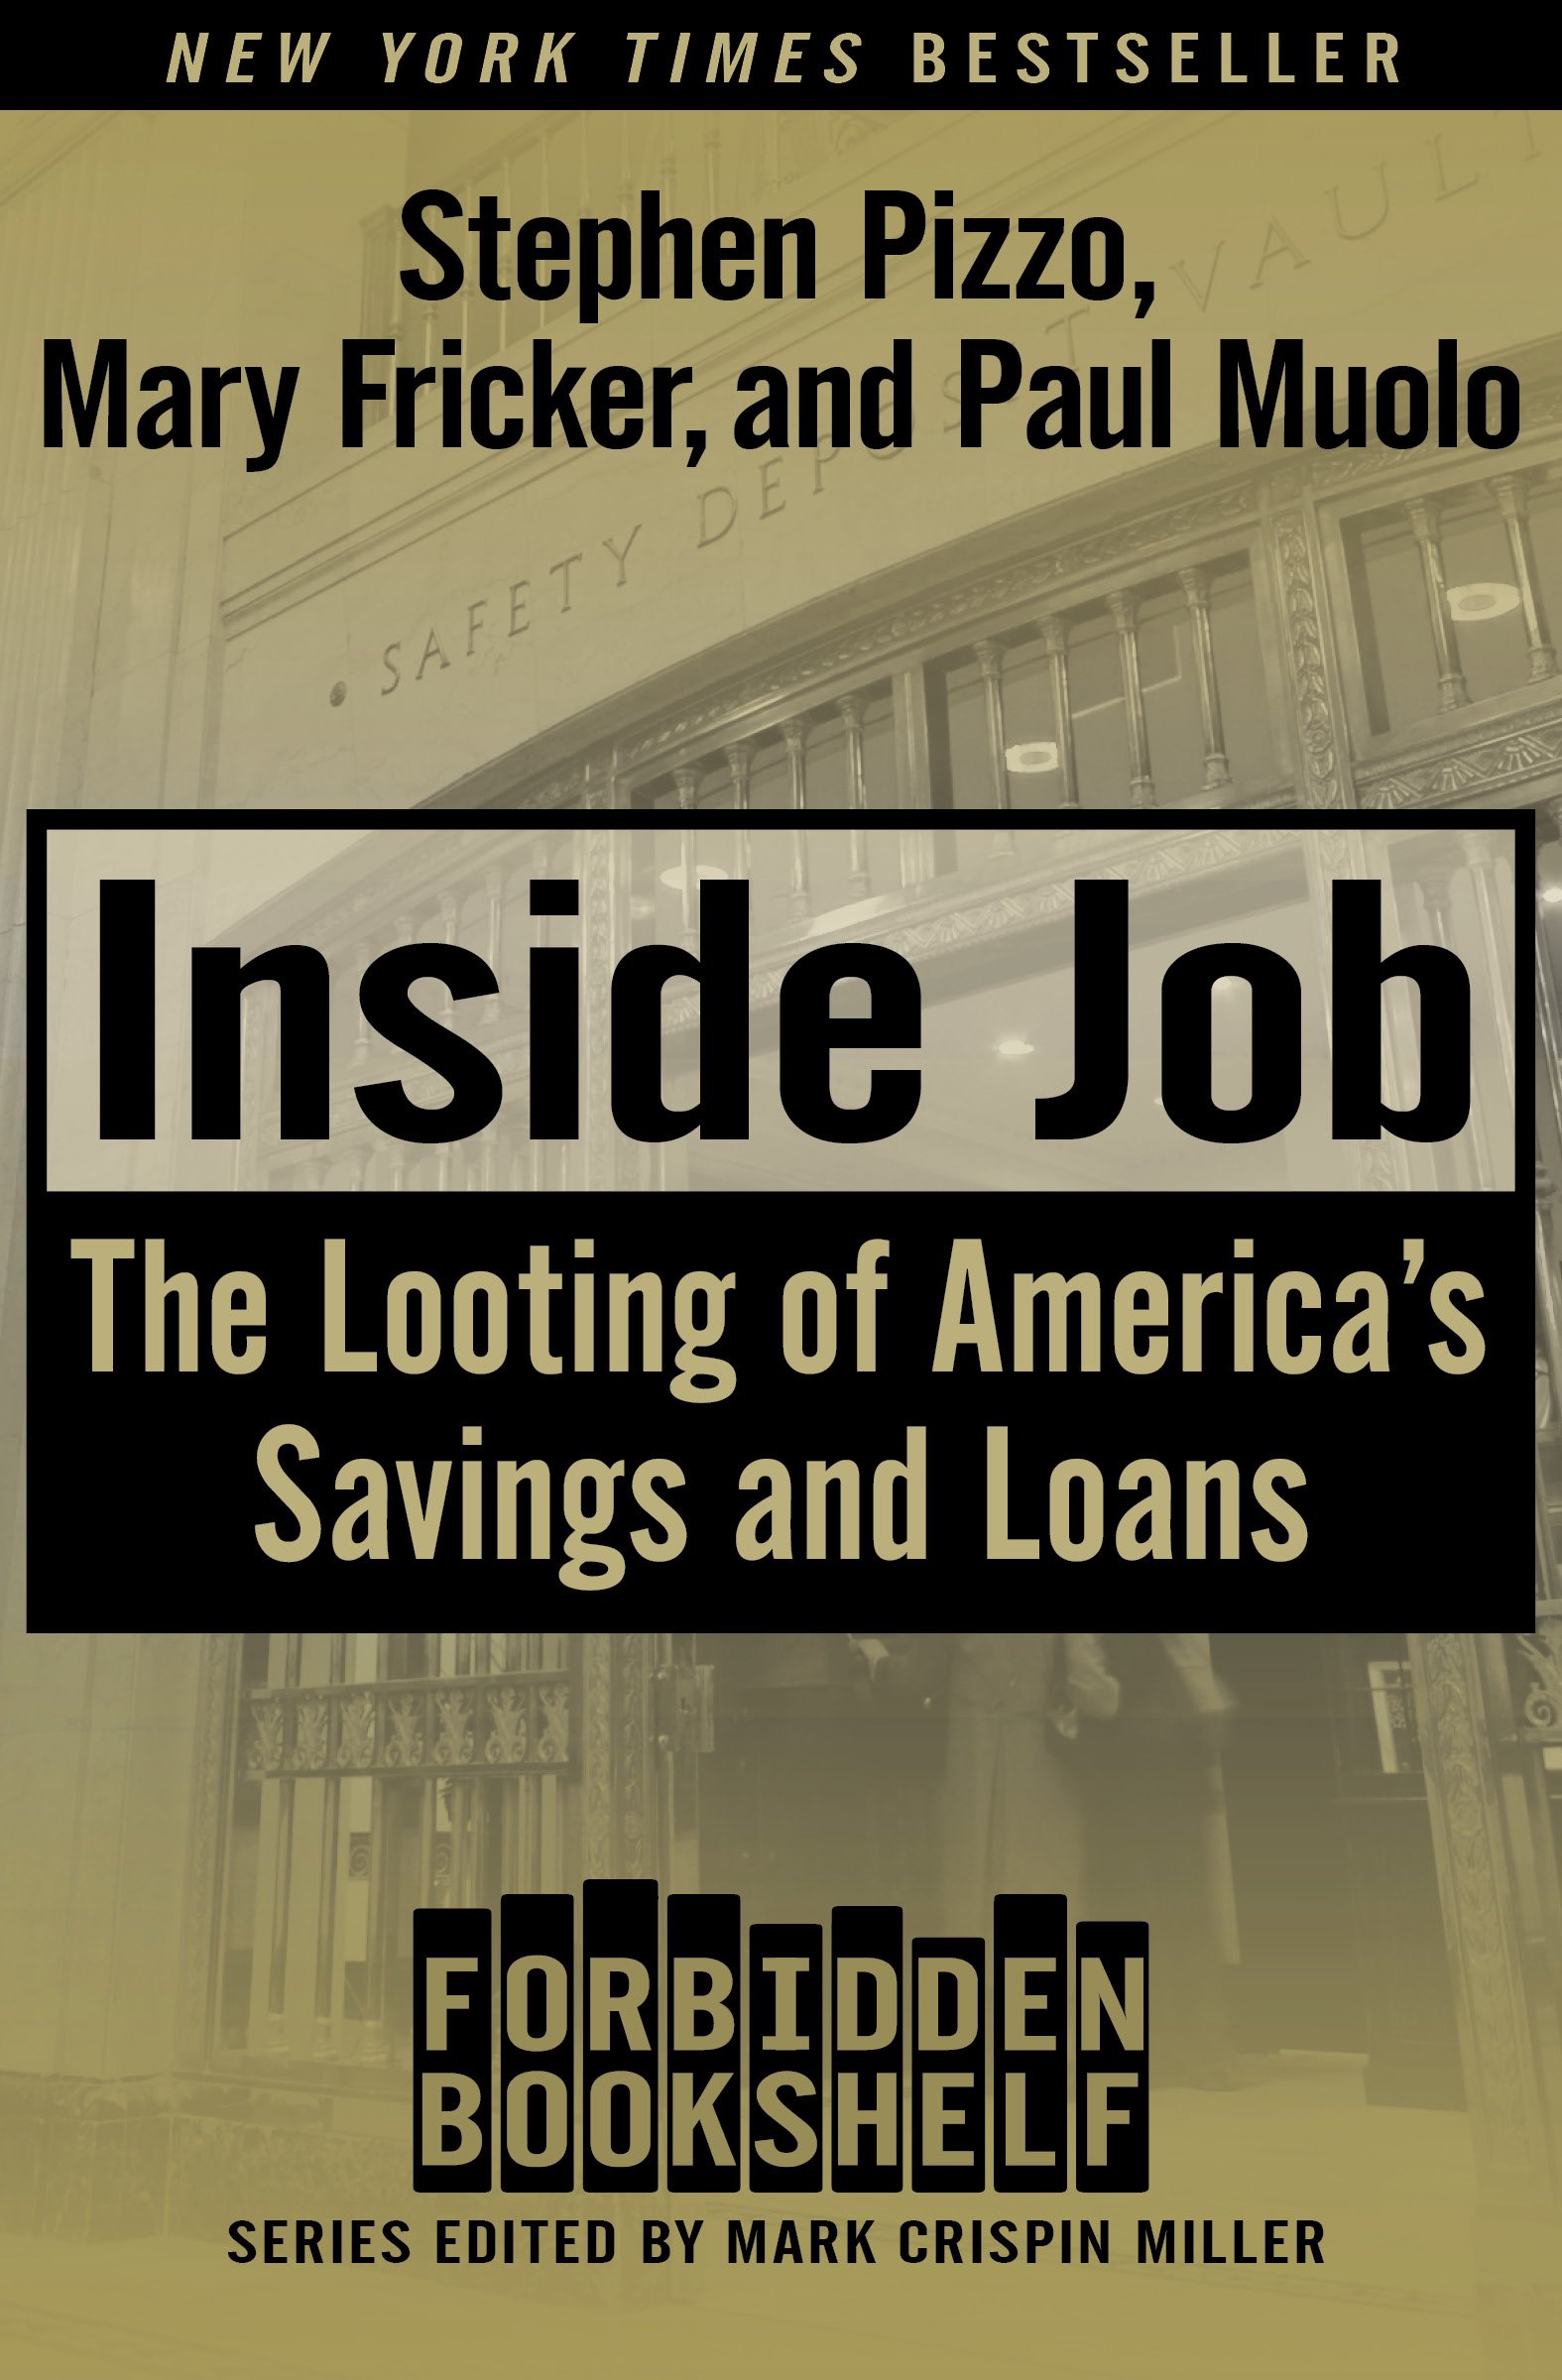 Inside Job: The Looting of America's Savings and Loans (Forbidden Bookshelf)